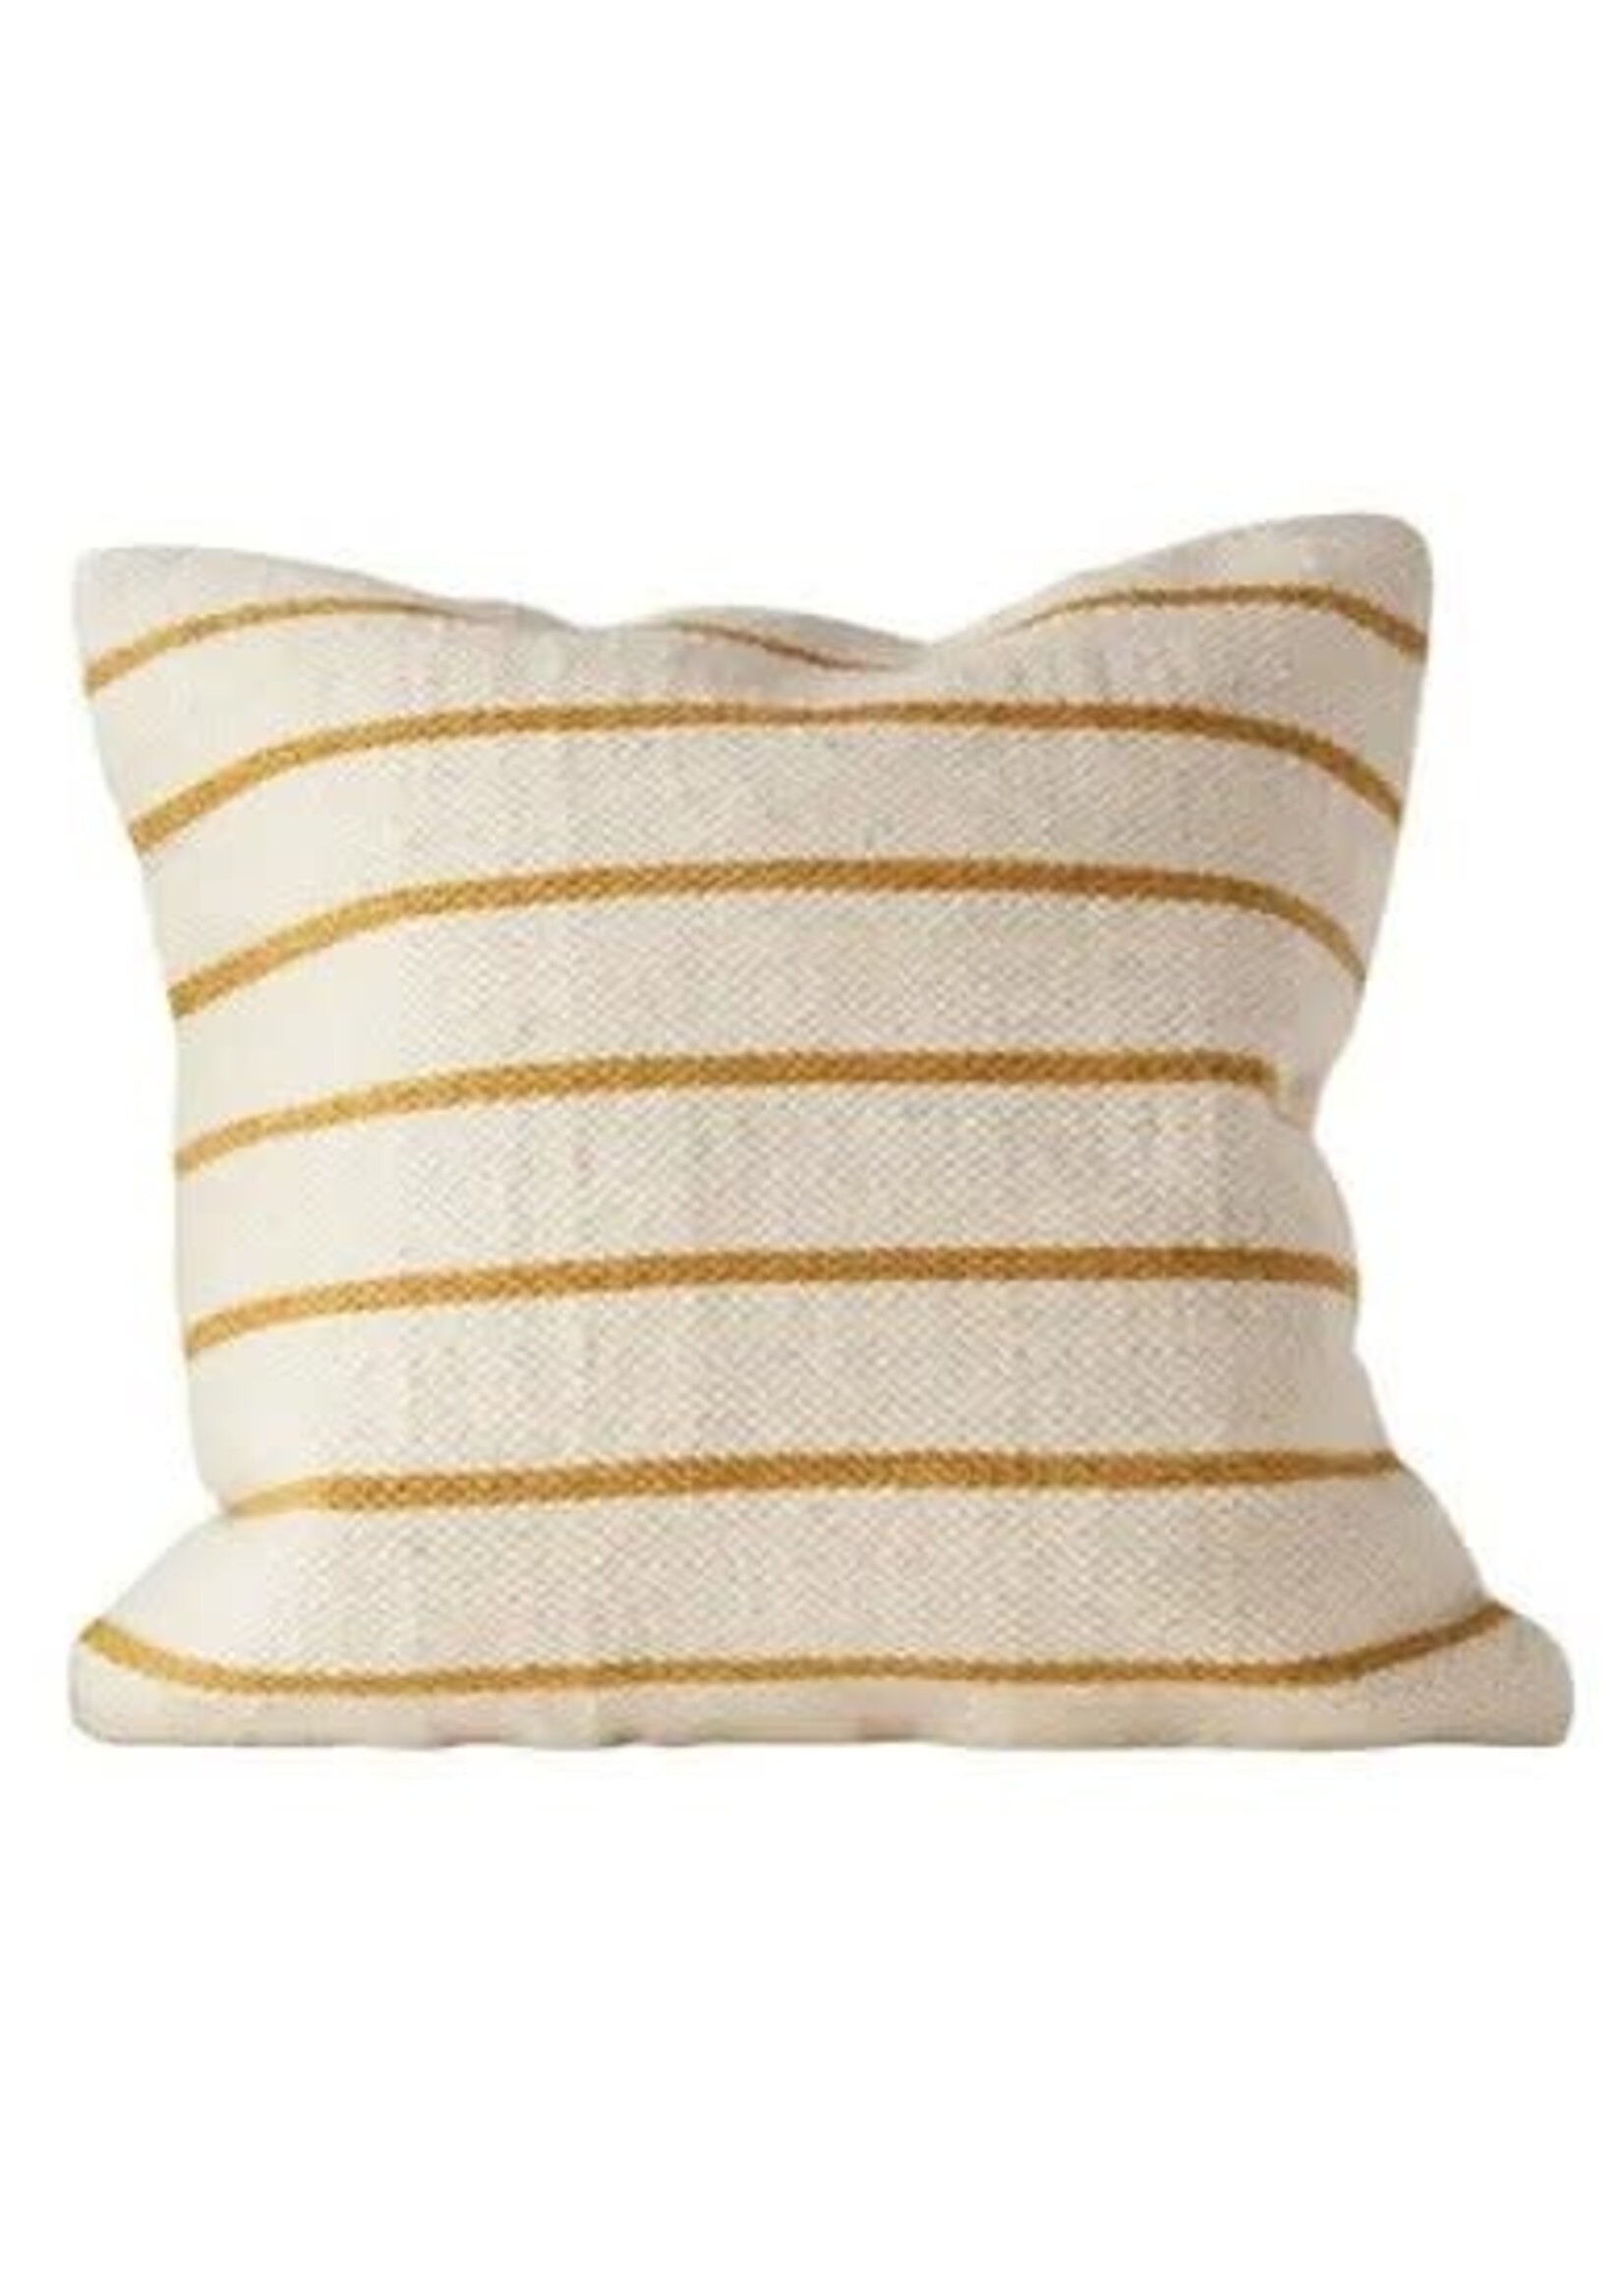 Striped Pillow Yellow